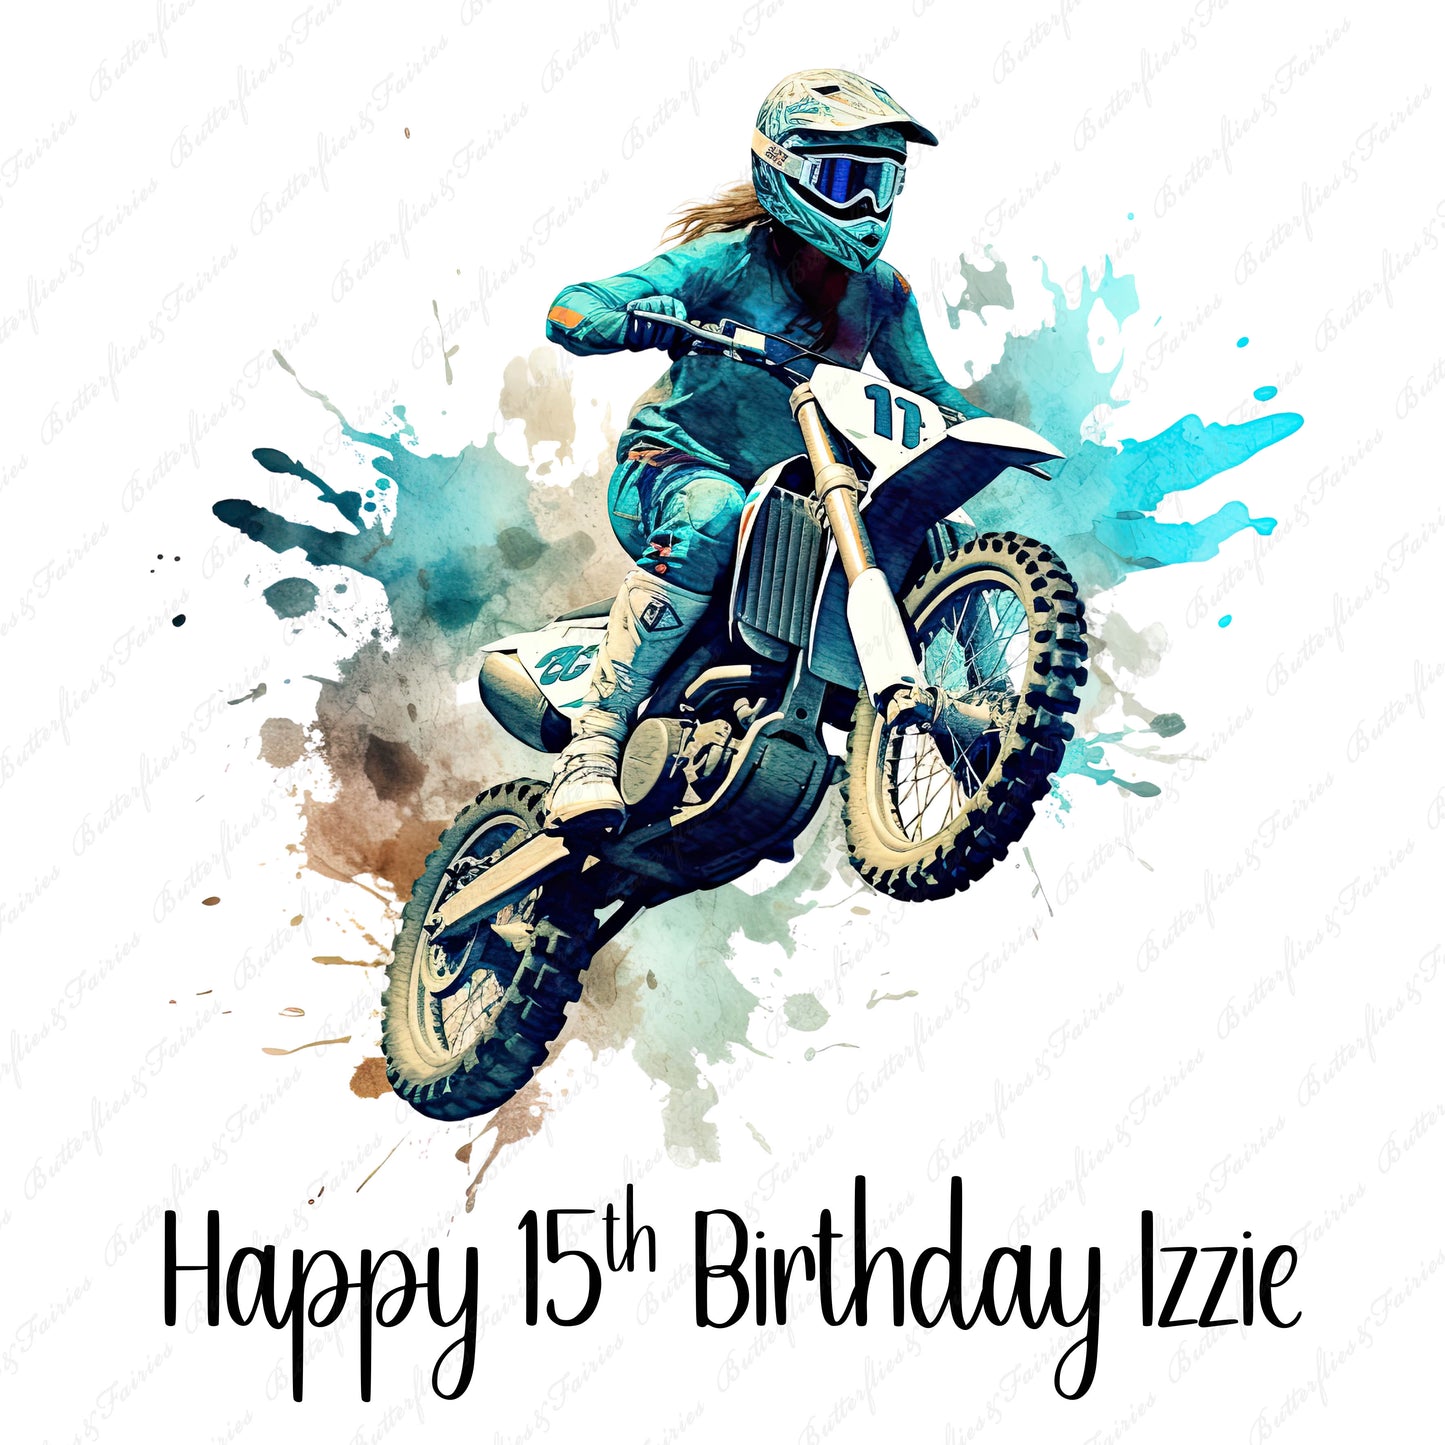 Personalised Motocross Birthday Card | Personalised Dirt Bike Birthday Card